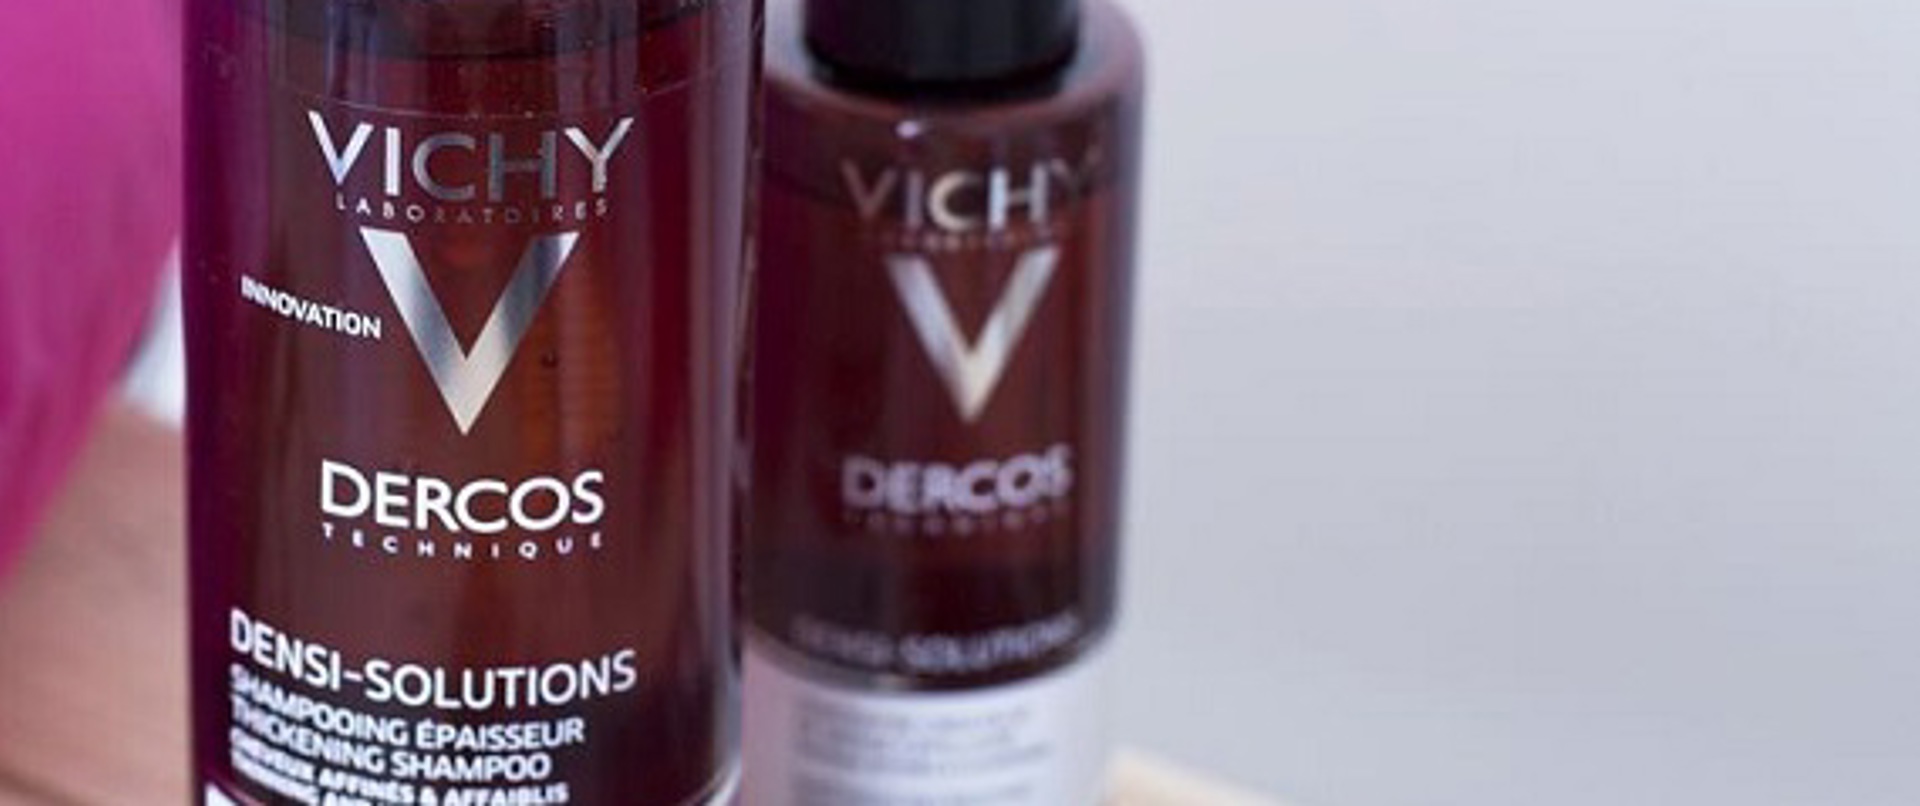 İlk Saç Sırları.com denedi: Vichy Dercos Densi-Solutions serisi